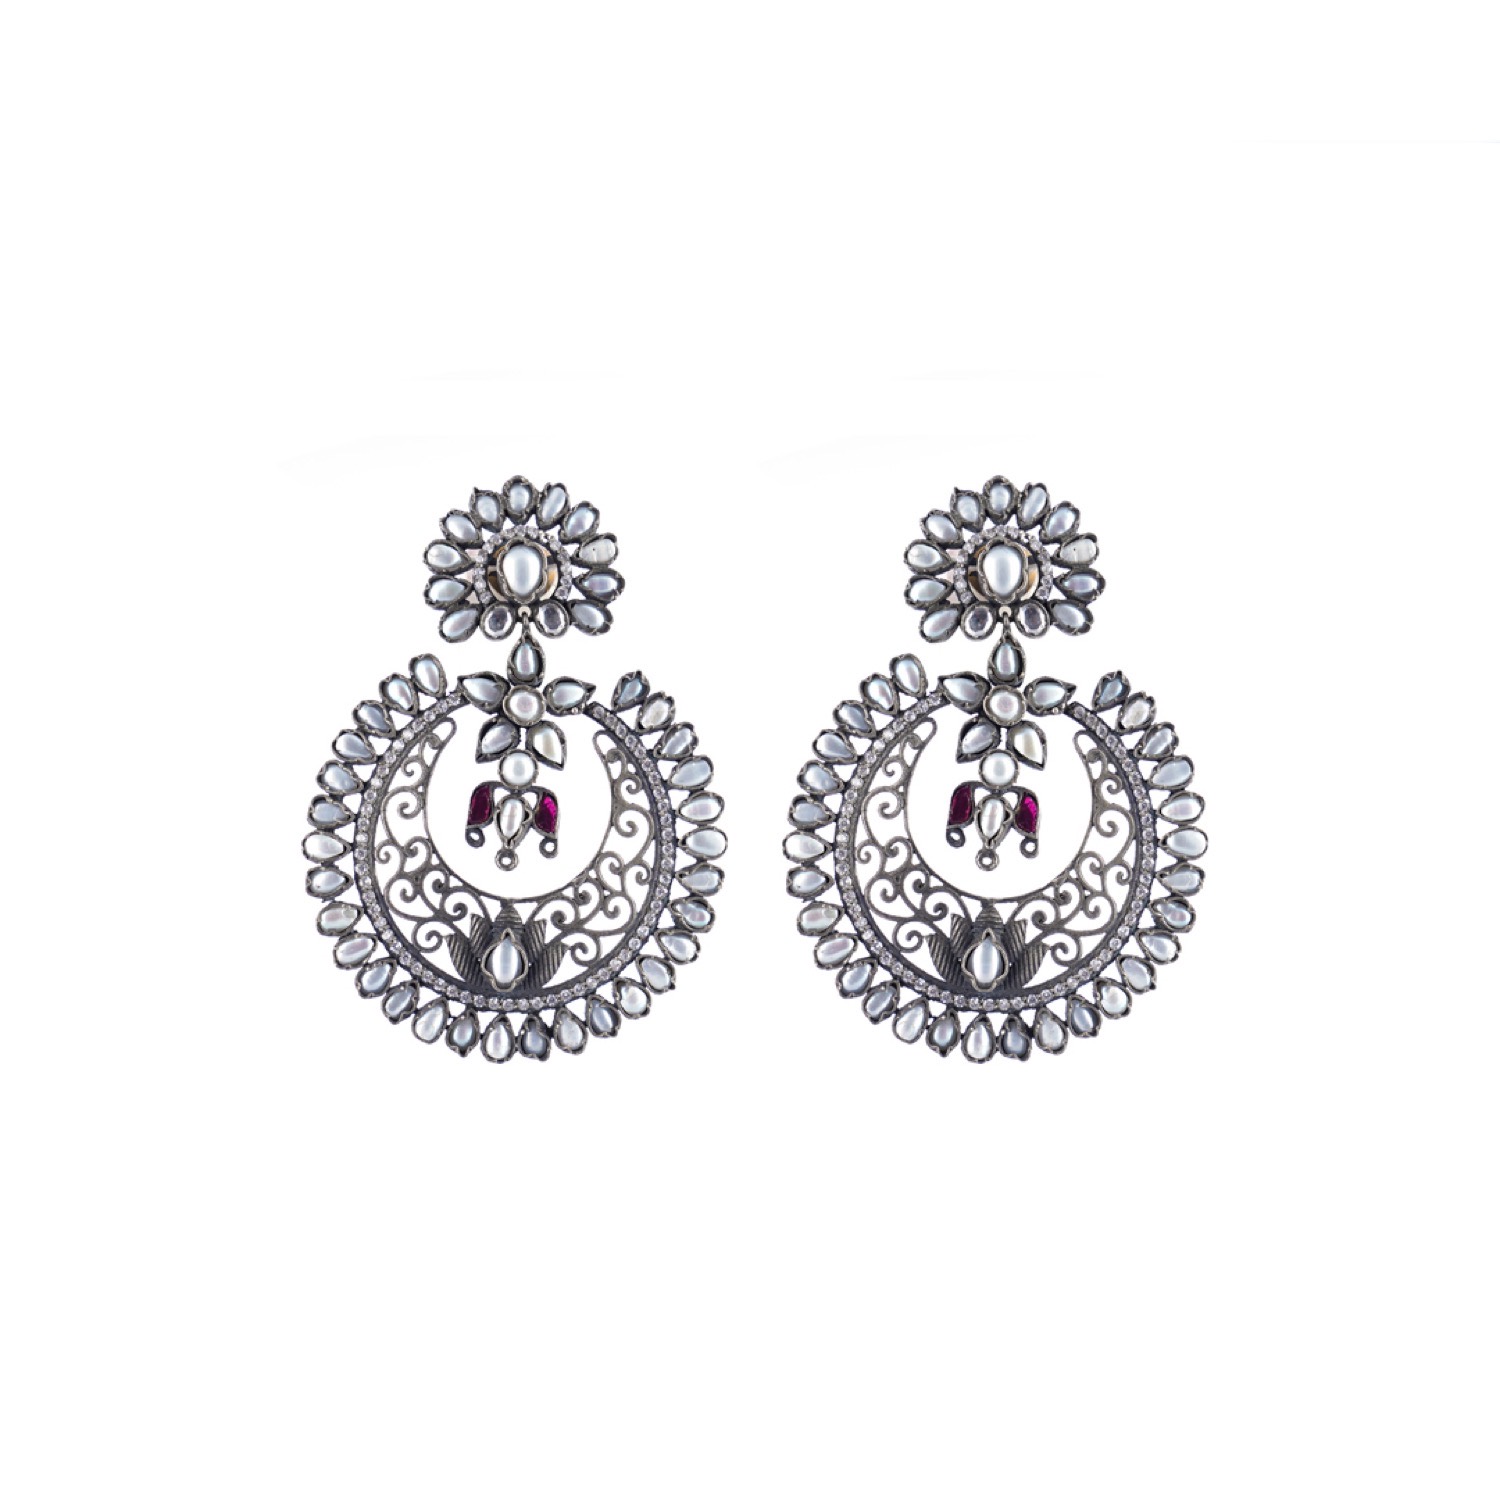 varam_earrings_102022_floral_design_pearl_stone_round_shaped_chadbali_silver_earrings-1